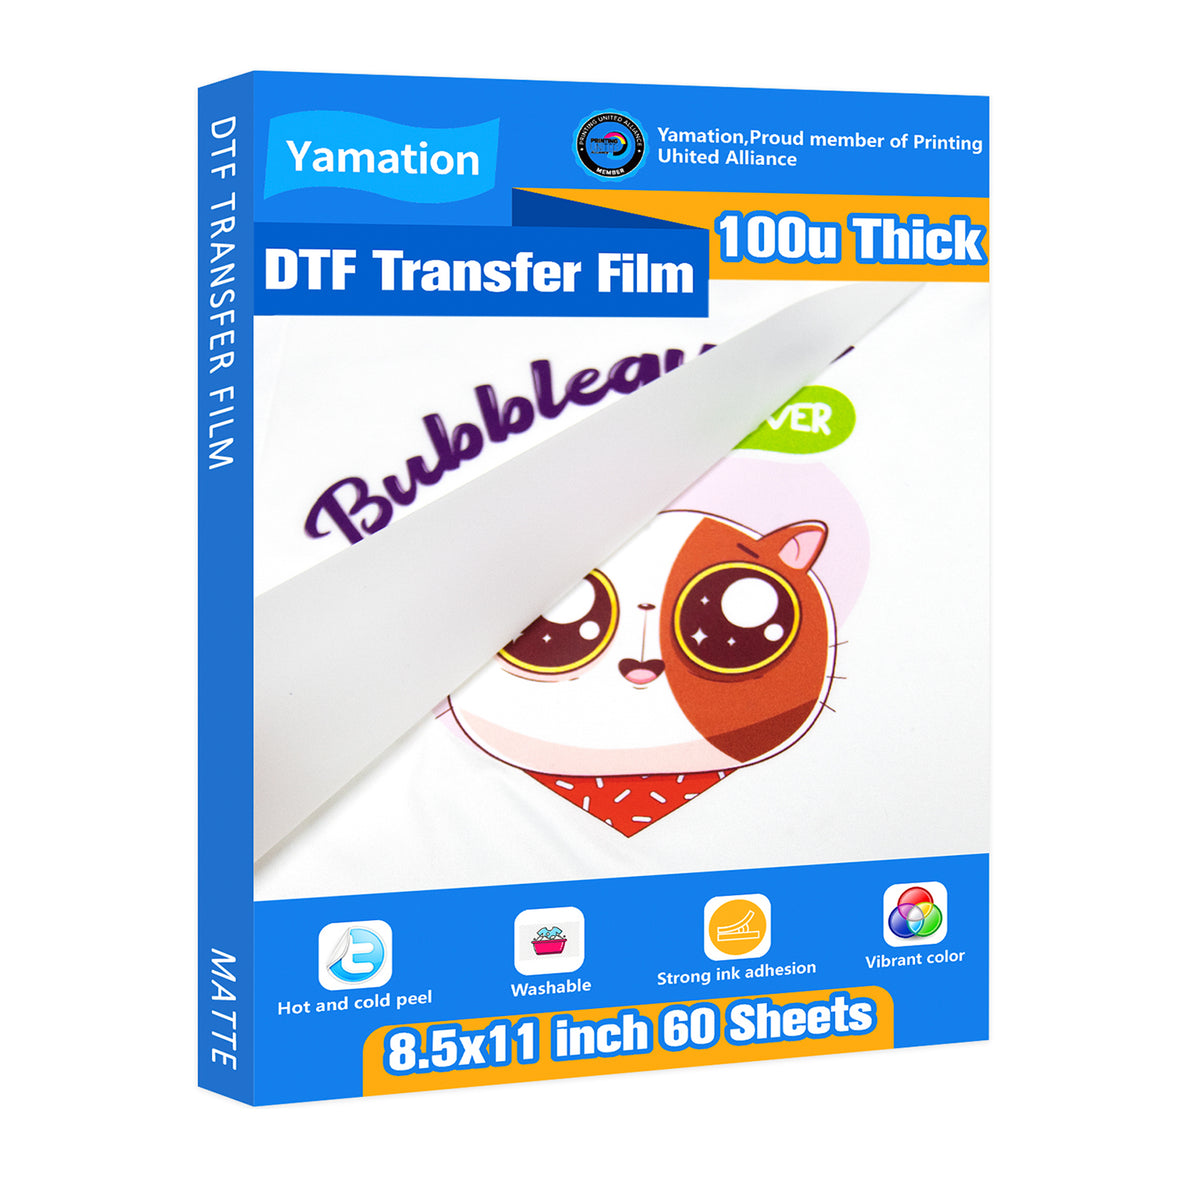 DTF Triple Coated Transfer Film Sheet (100 Pack)